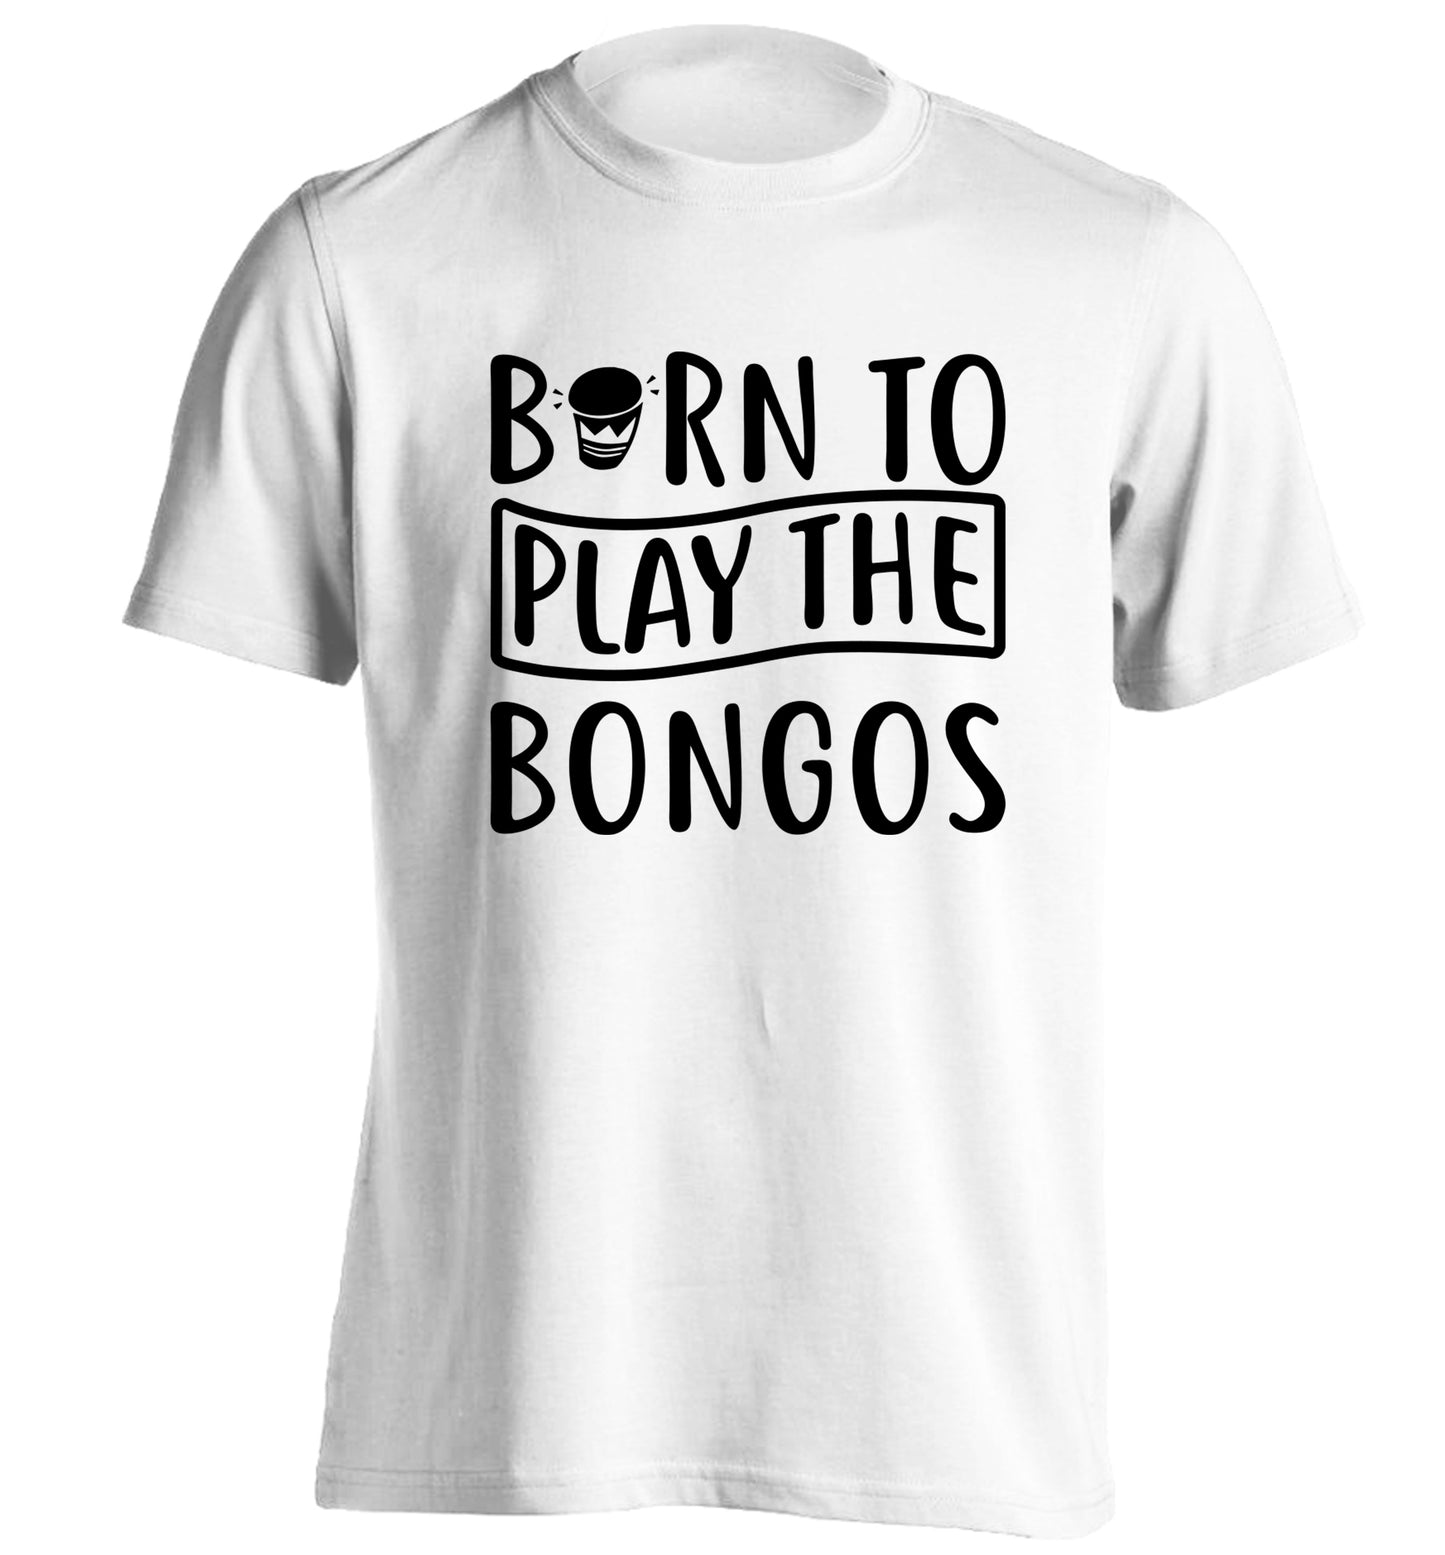 Born to play the bongos adults unisex white Tshirt 2XL